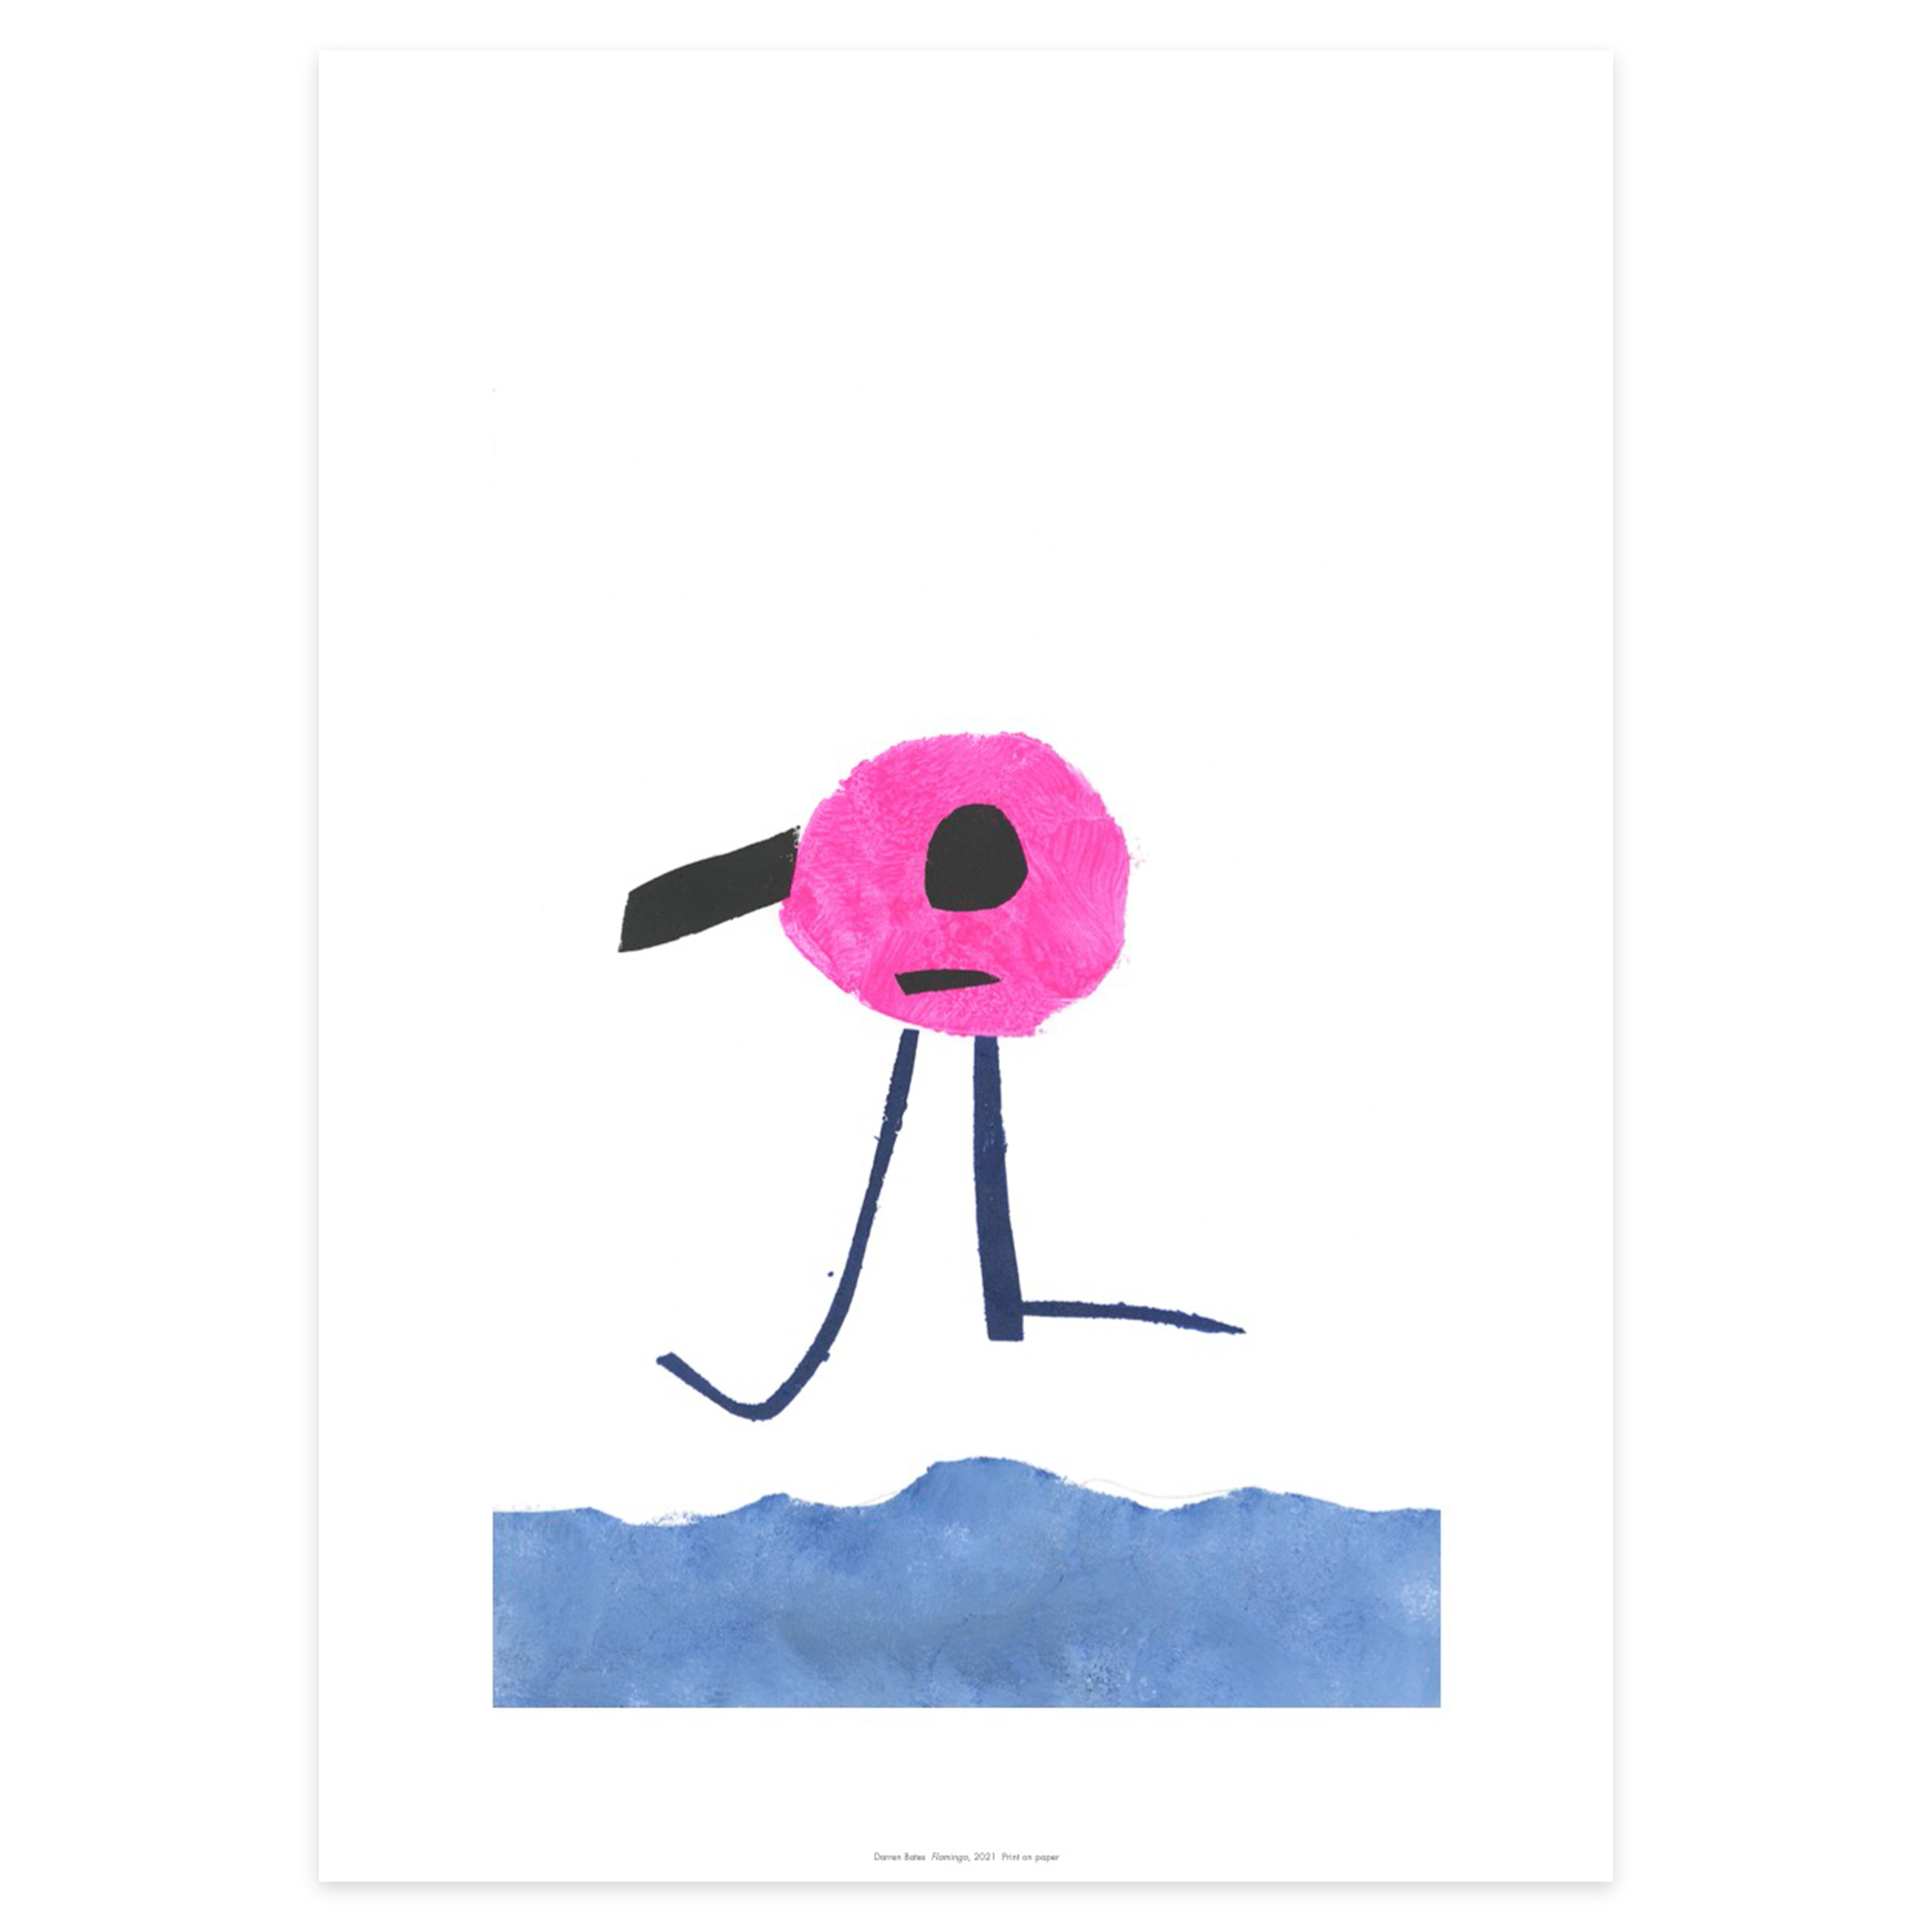 Reproduction of Flamingo by Darren Bates.